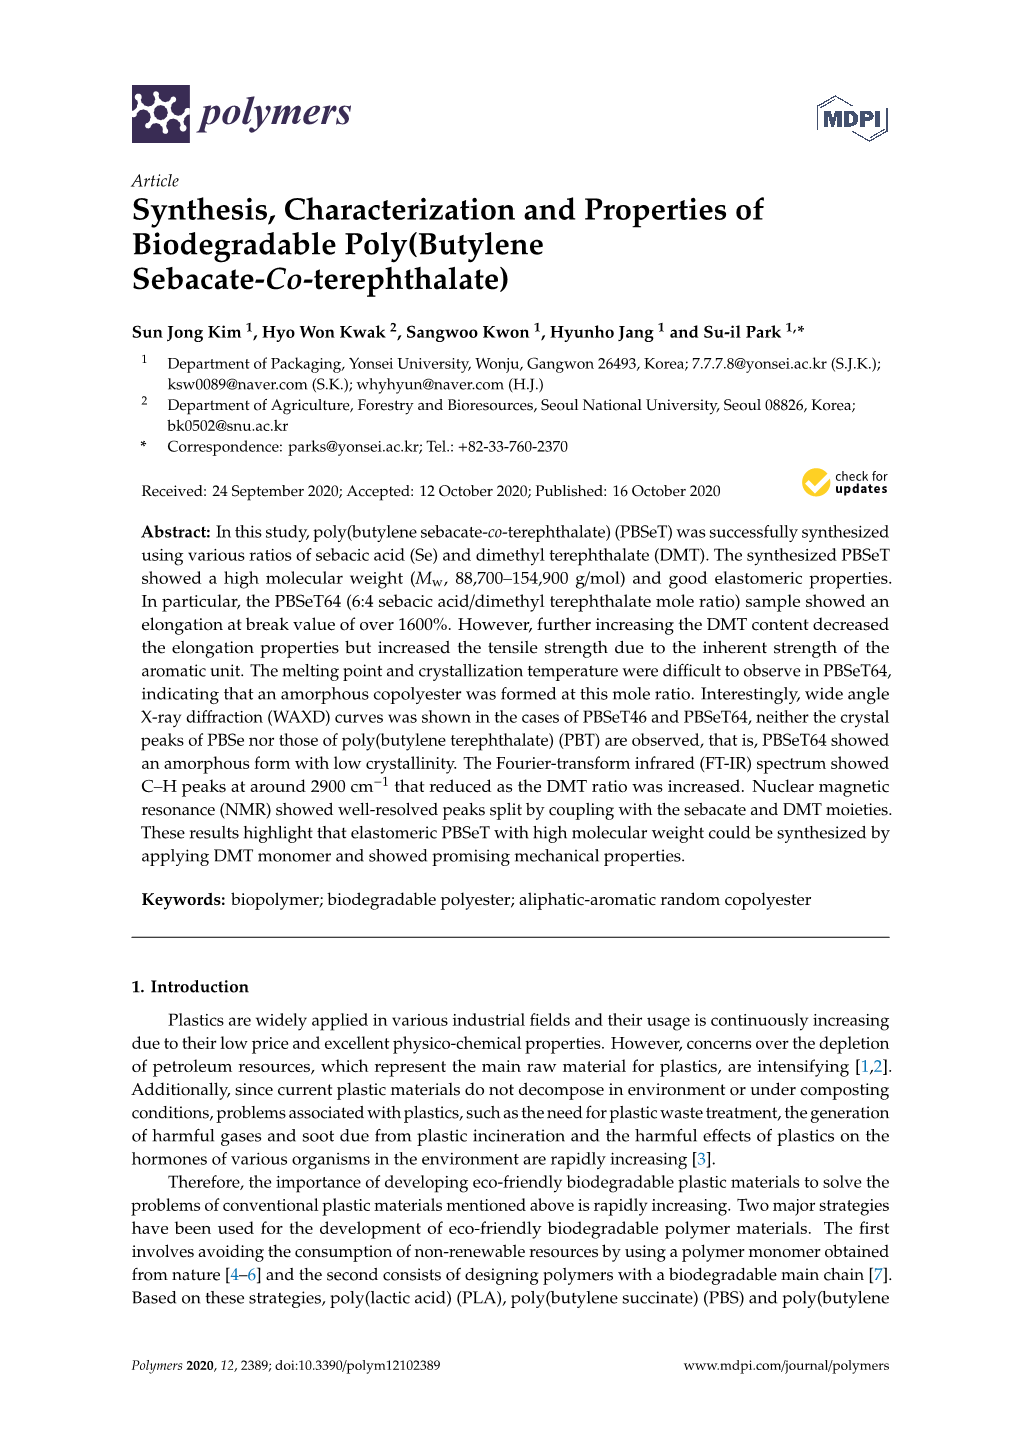 Synthesis, Characterization and Properties of Biodegradable Poly(Butylene Sebacate-Co-Terephthalate)